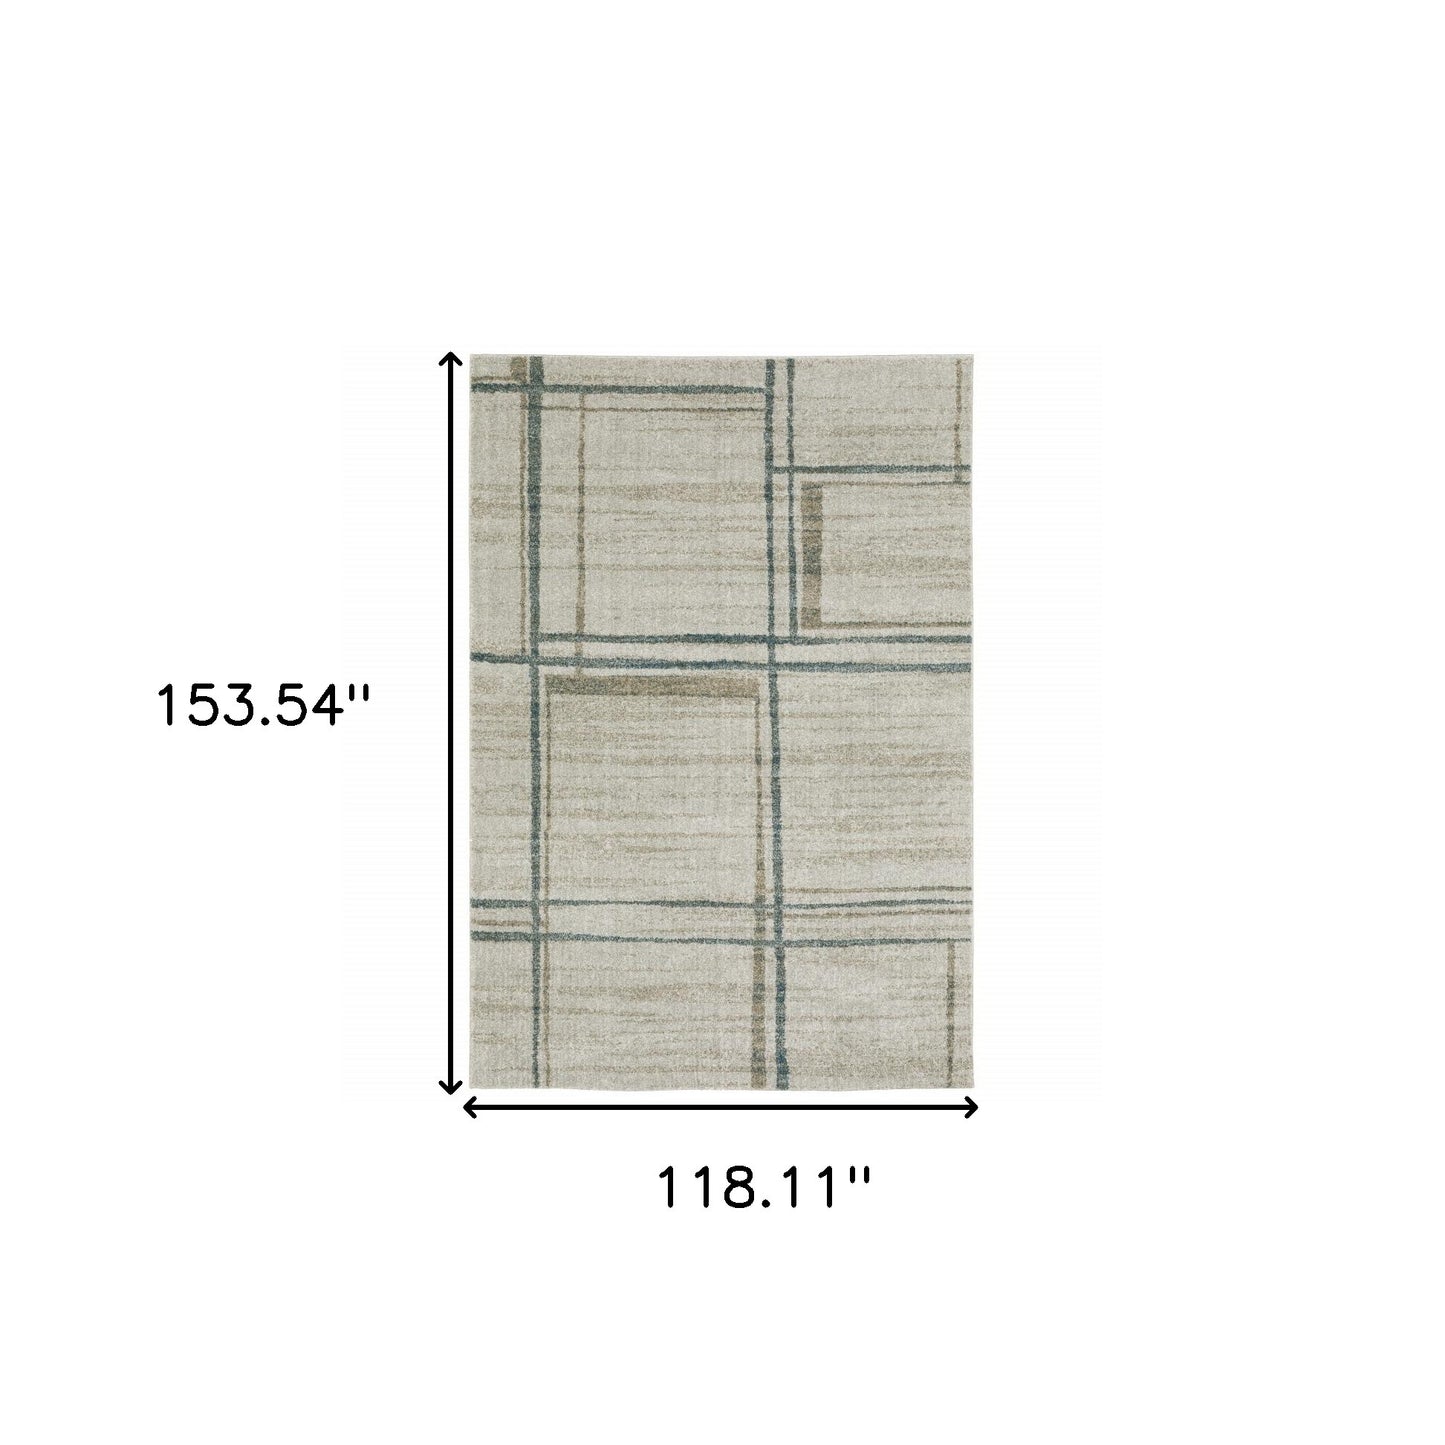 10' x 13' Grey Teal Beige and Tan Geometric Power Loom Area Rug